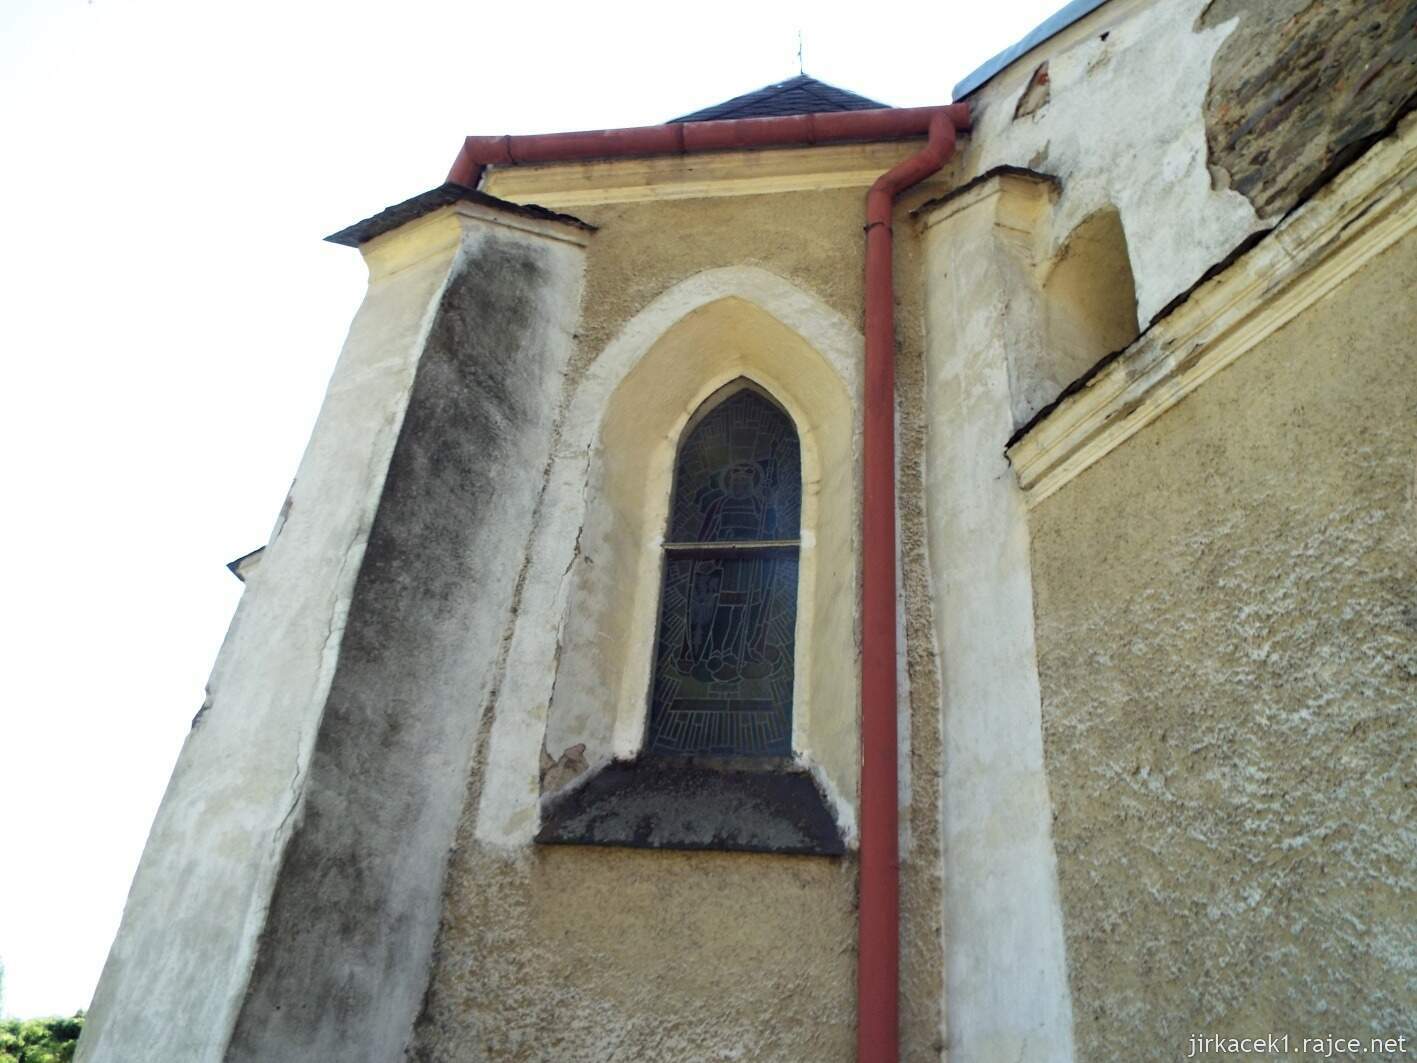 I - Razová - kostel svatého Michala 12 - vitrážové okno presbyteria